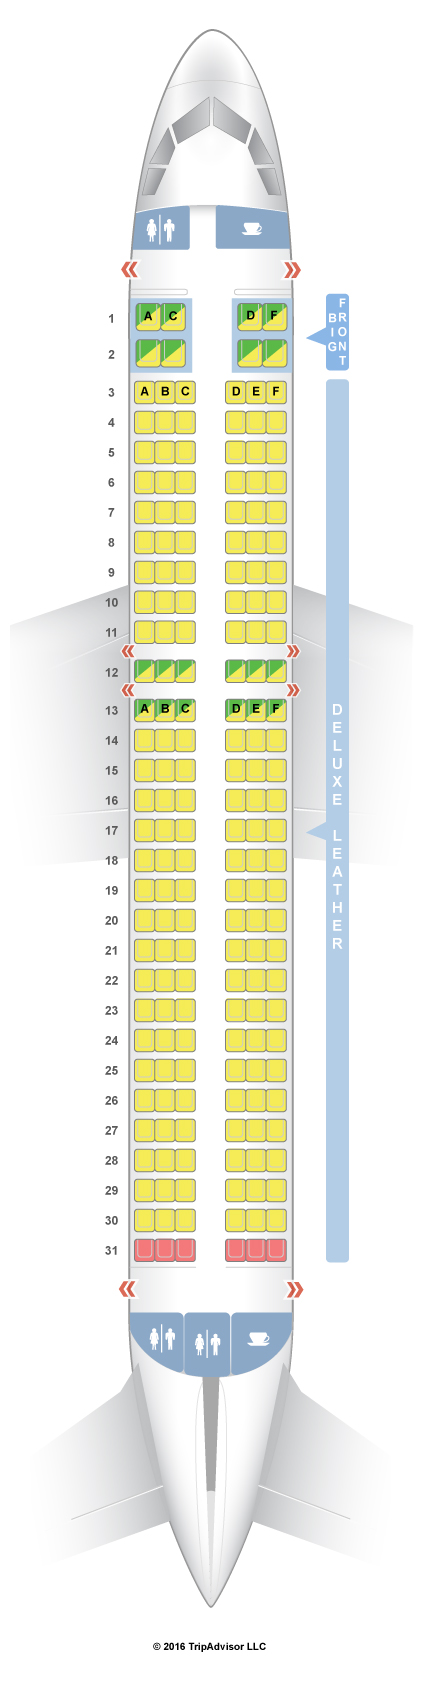 Spirit Com Seating Chart